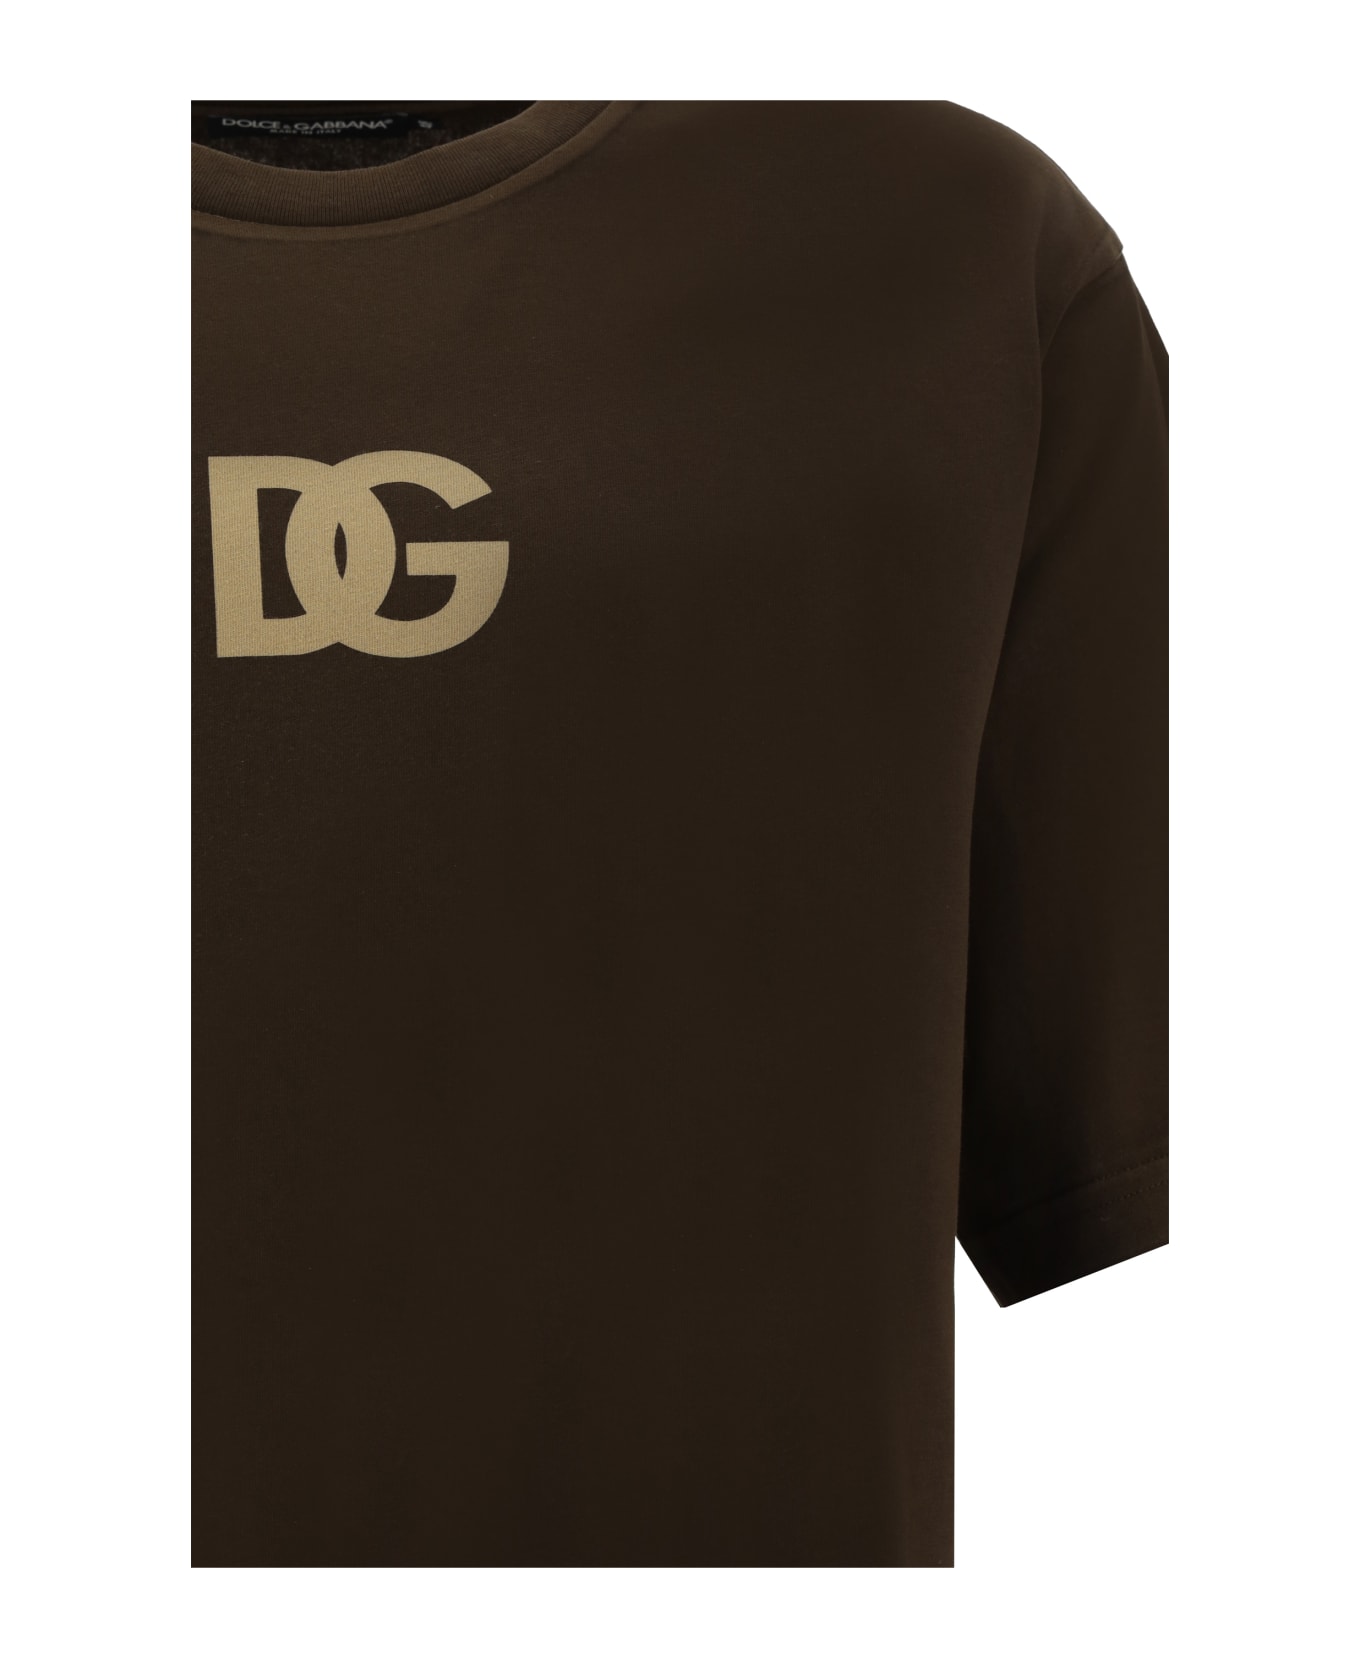 Dolce & Gabbana Brown Cotton T-shirt - Marrone Scuro